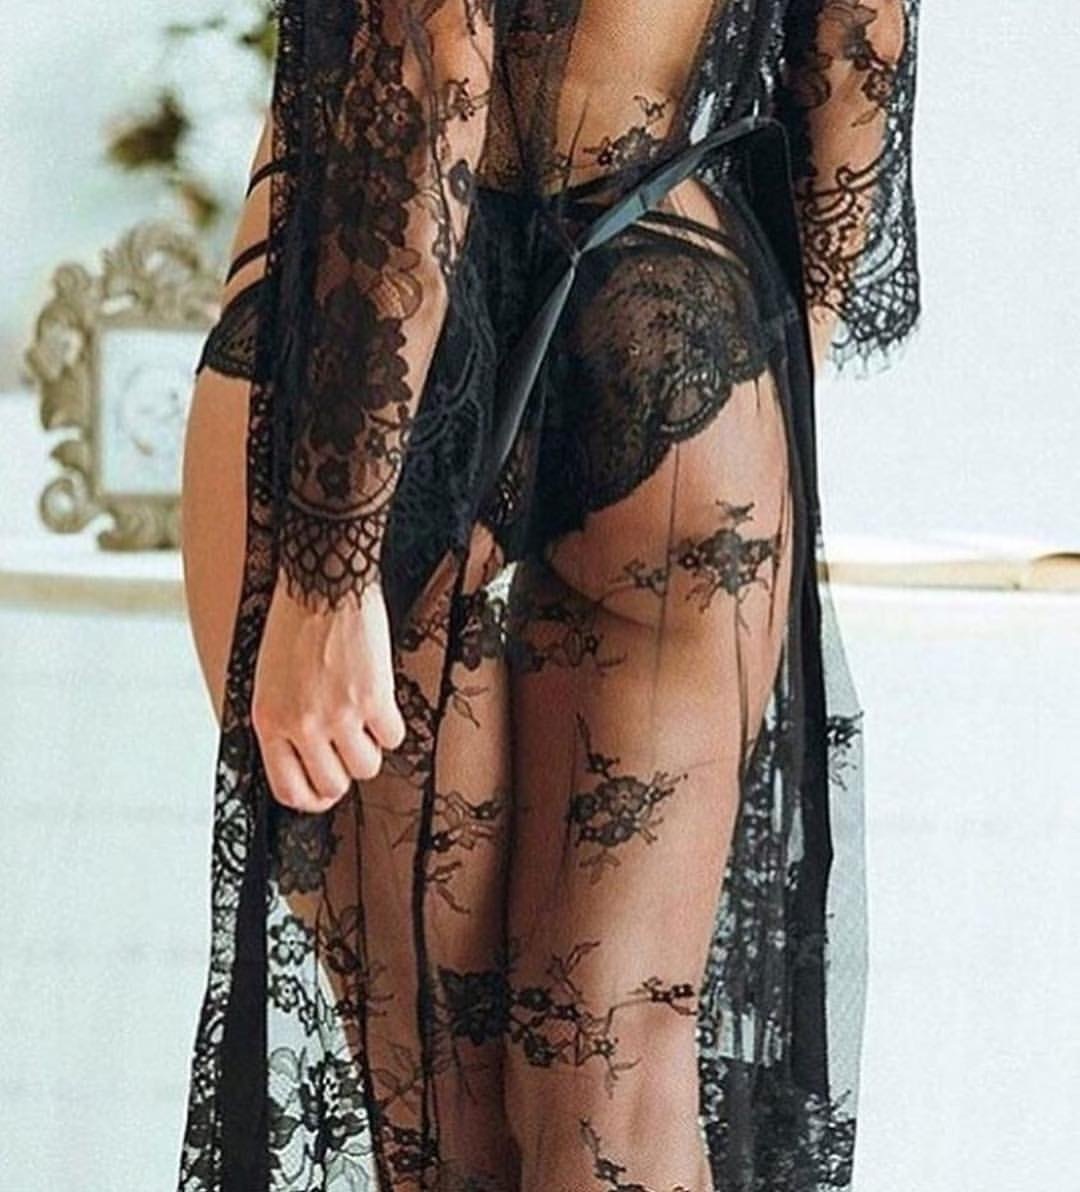 sexy lace robe